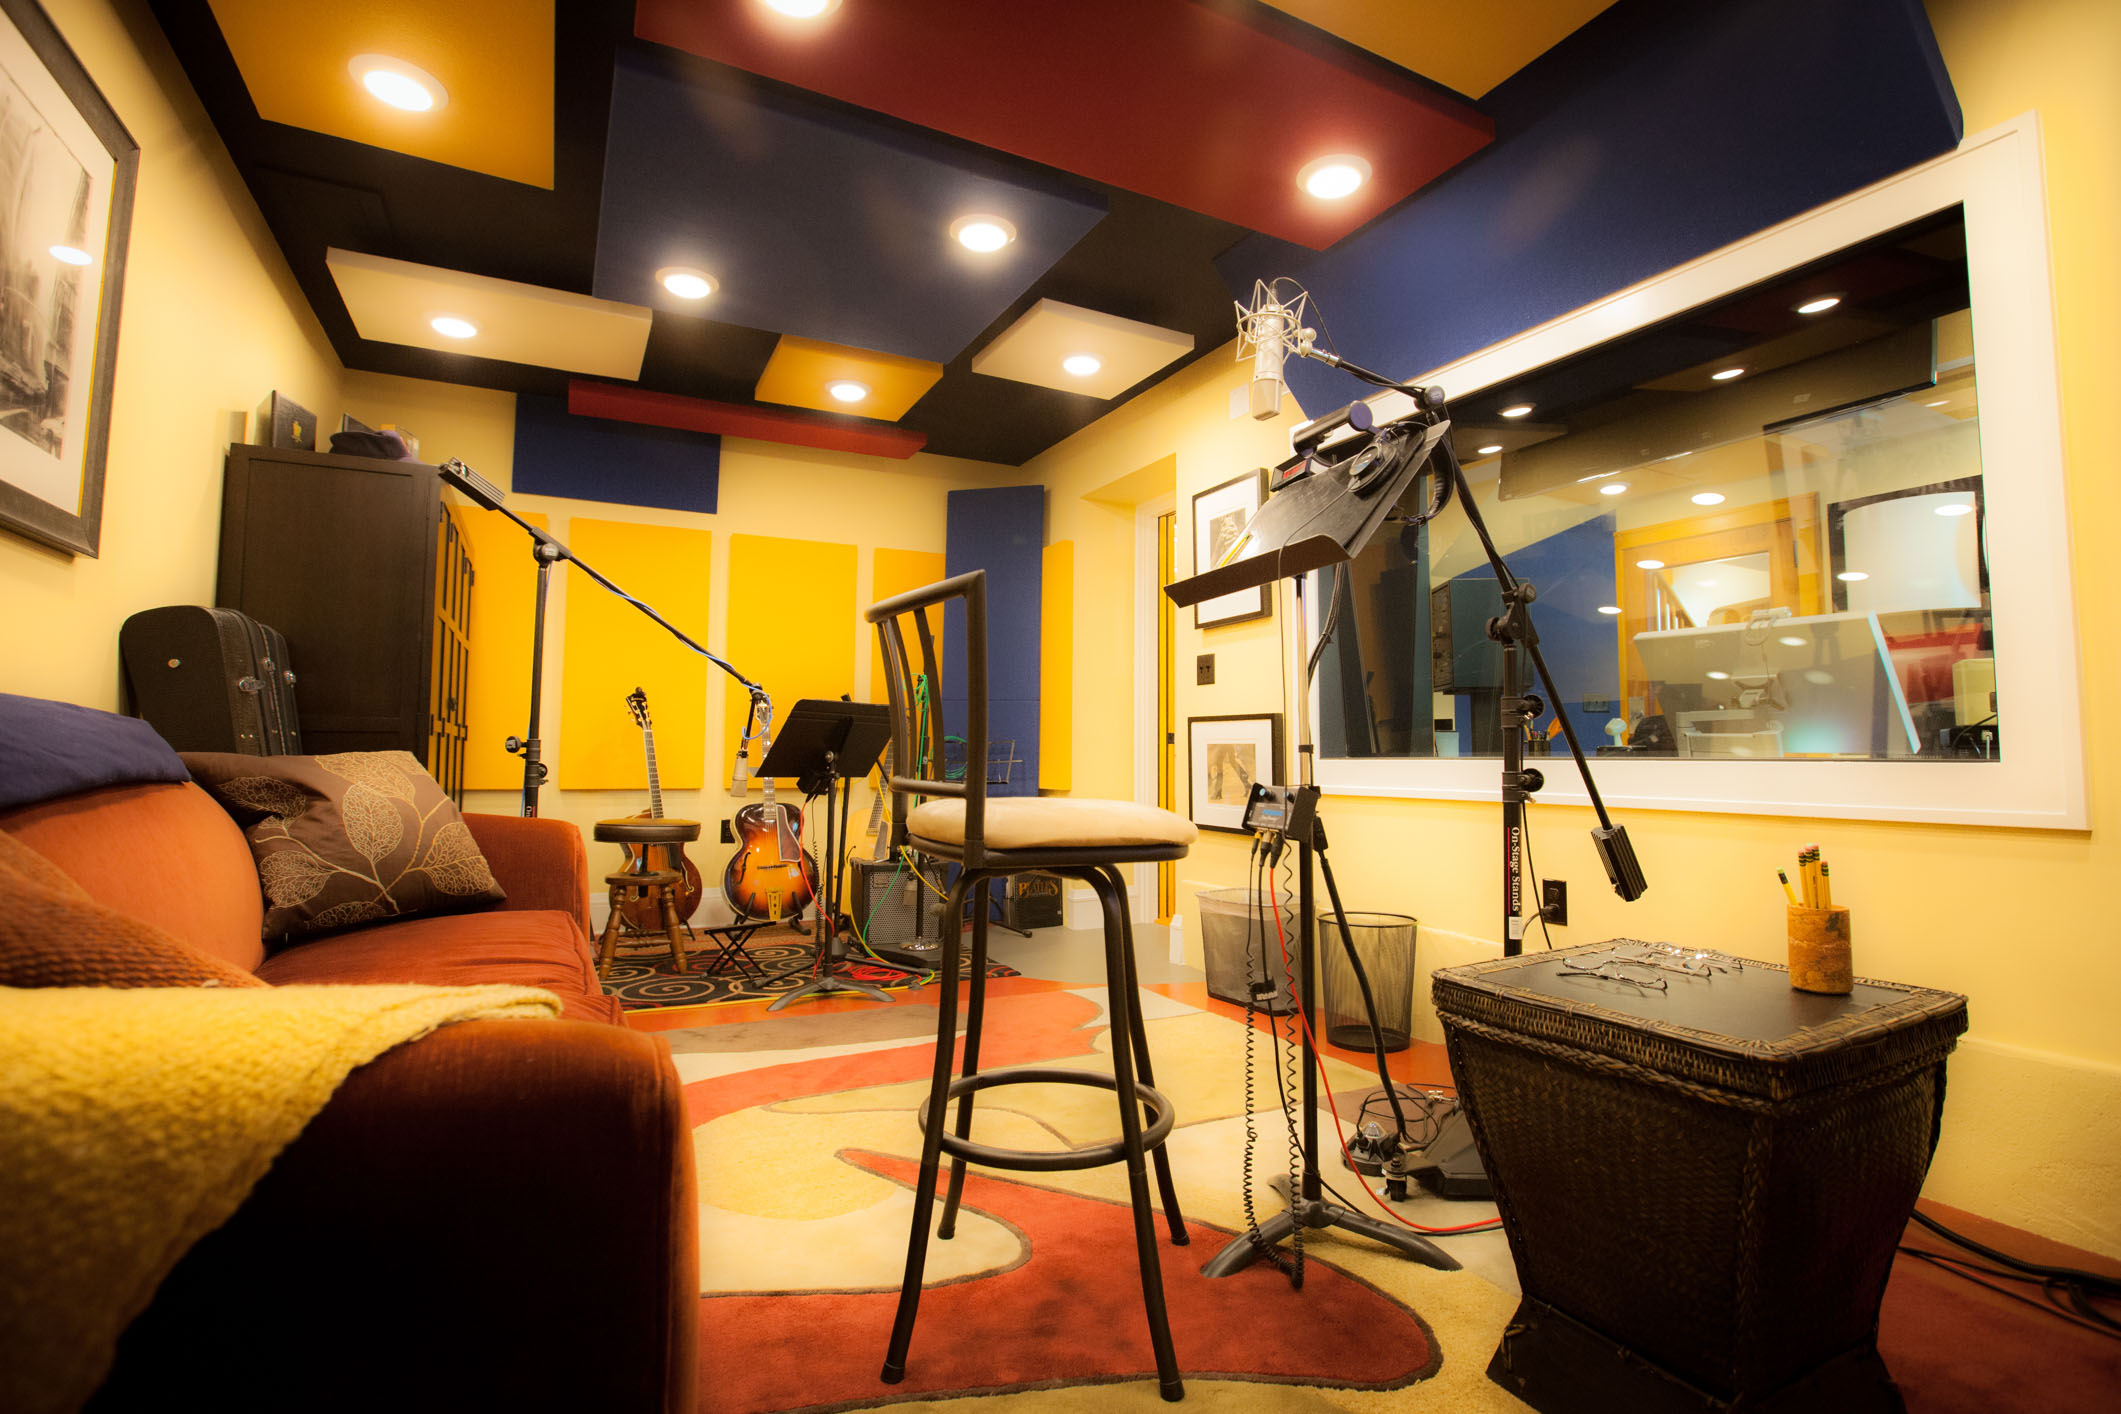 Minneapolis ISDN Voice-Over Recording Studio | Twin Cities Digital Audio  Post Production Studios | Sound Design for radio, TV, Film + Podcasts